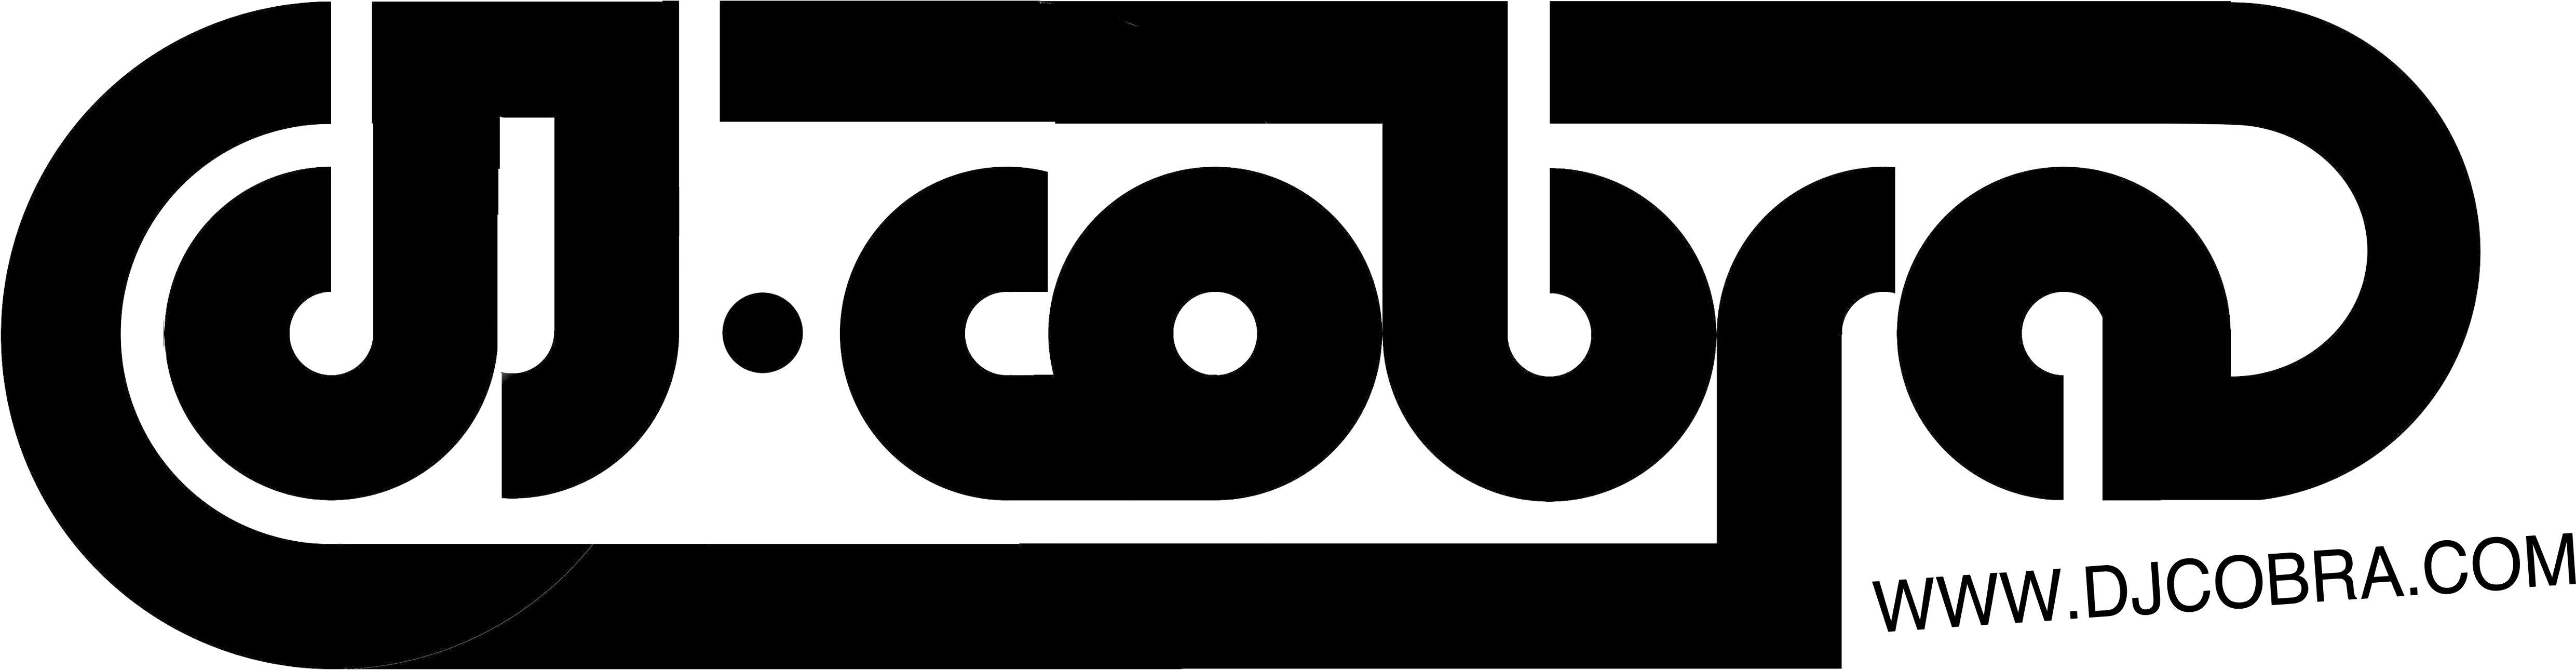 Dj Cobra Logo - Dj Cobra (5343x2228), Png Download